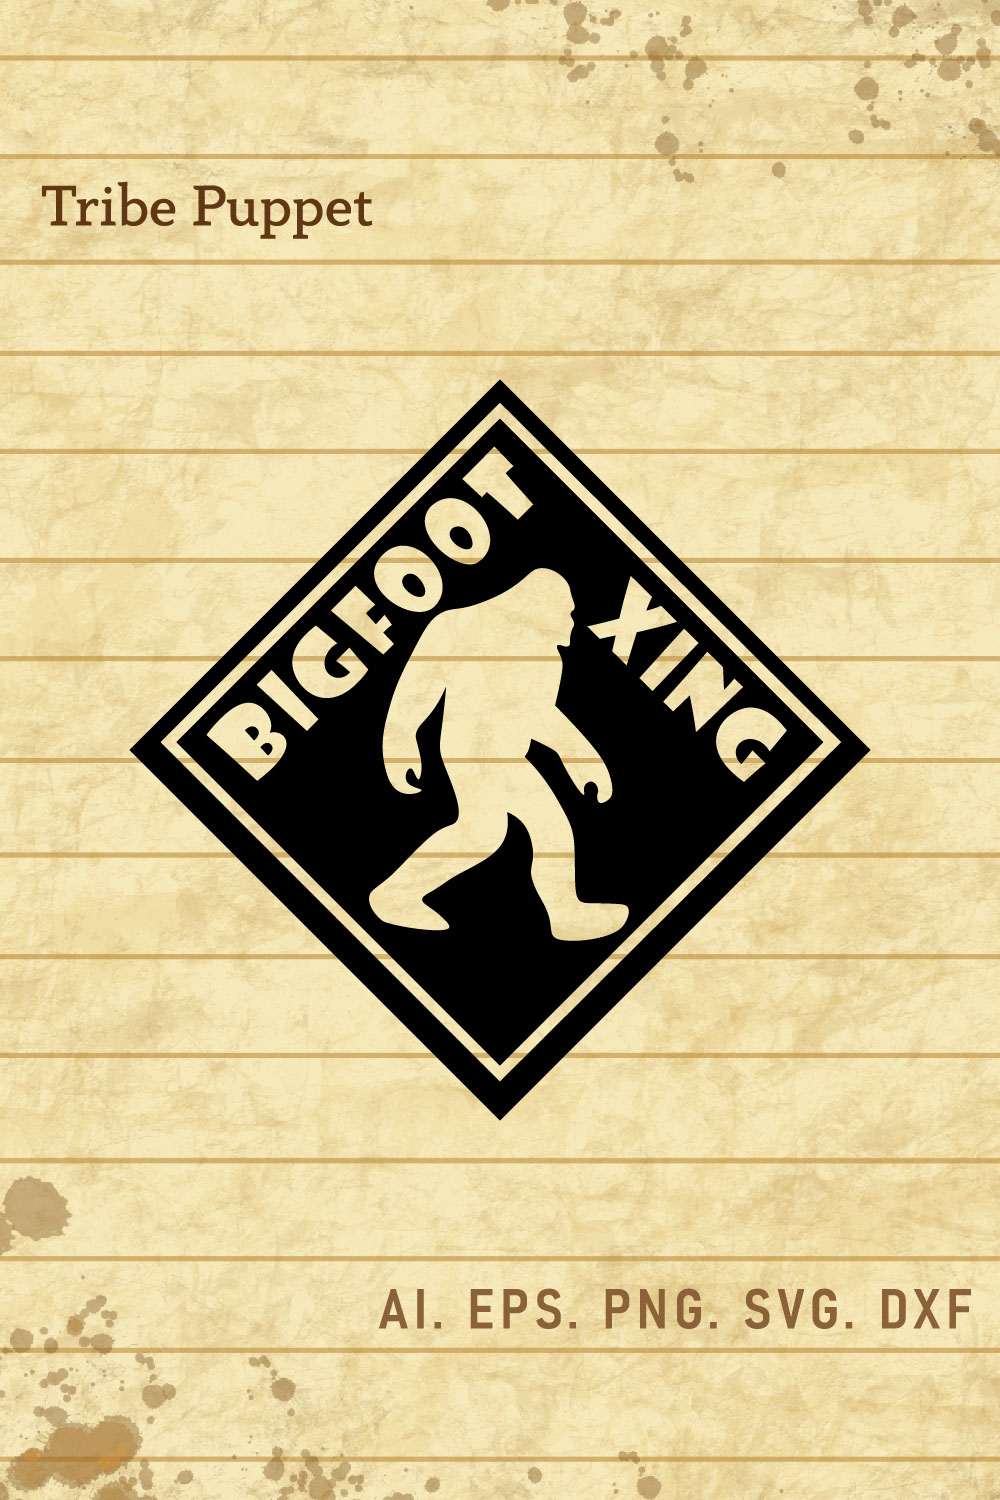 Bigfoot pinterest preview image.